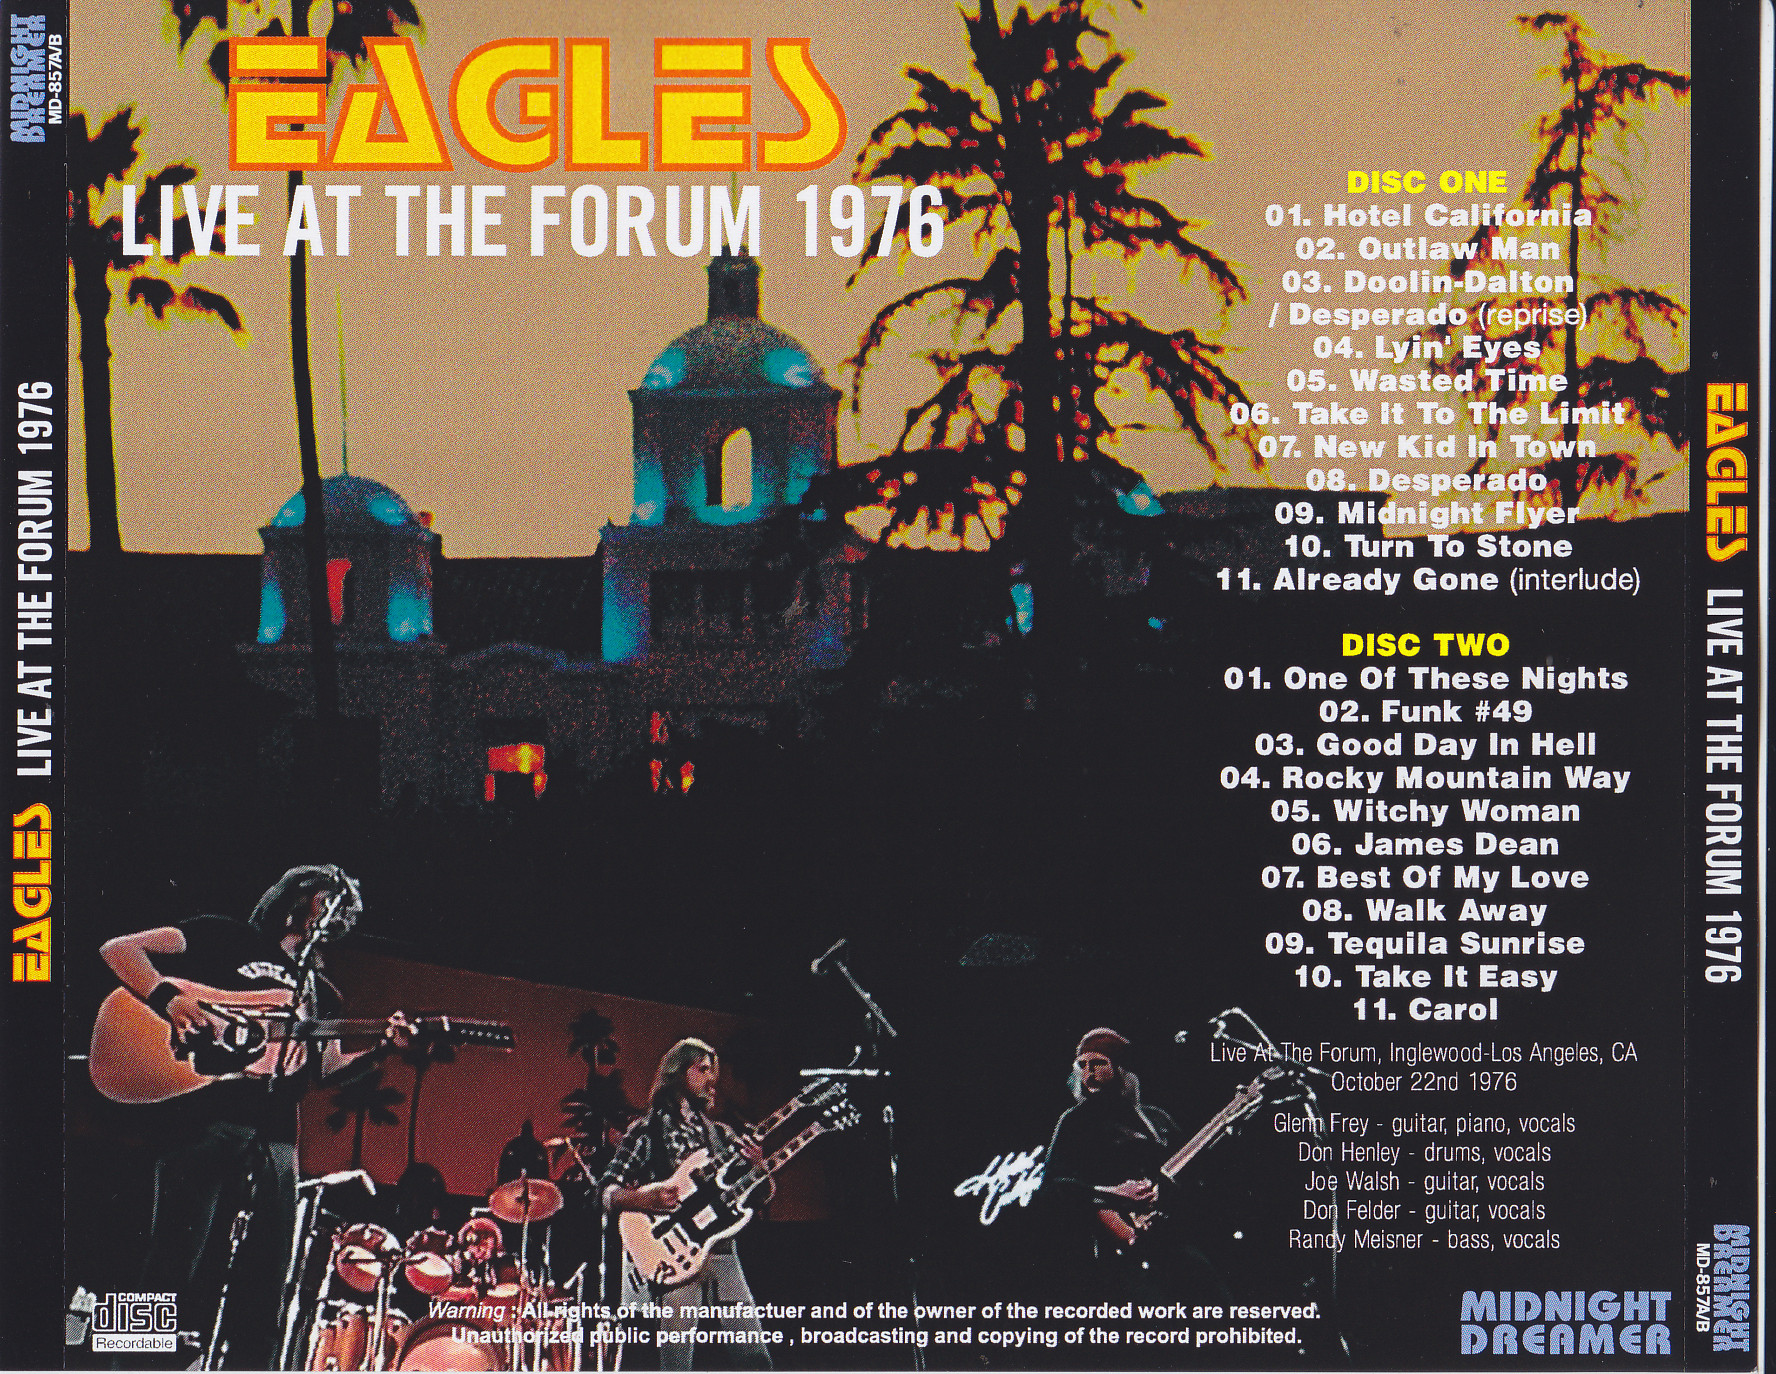 the eagles 1976 tour dates